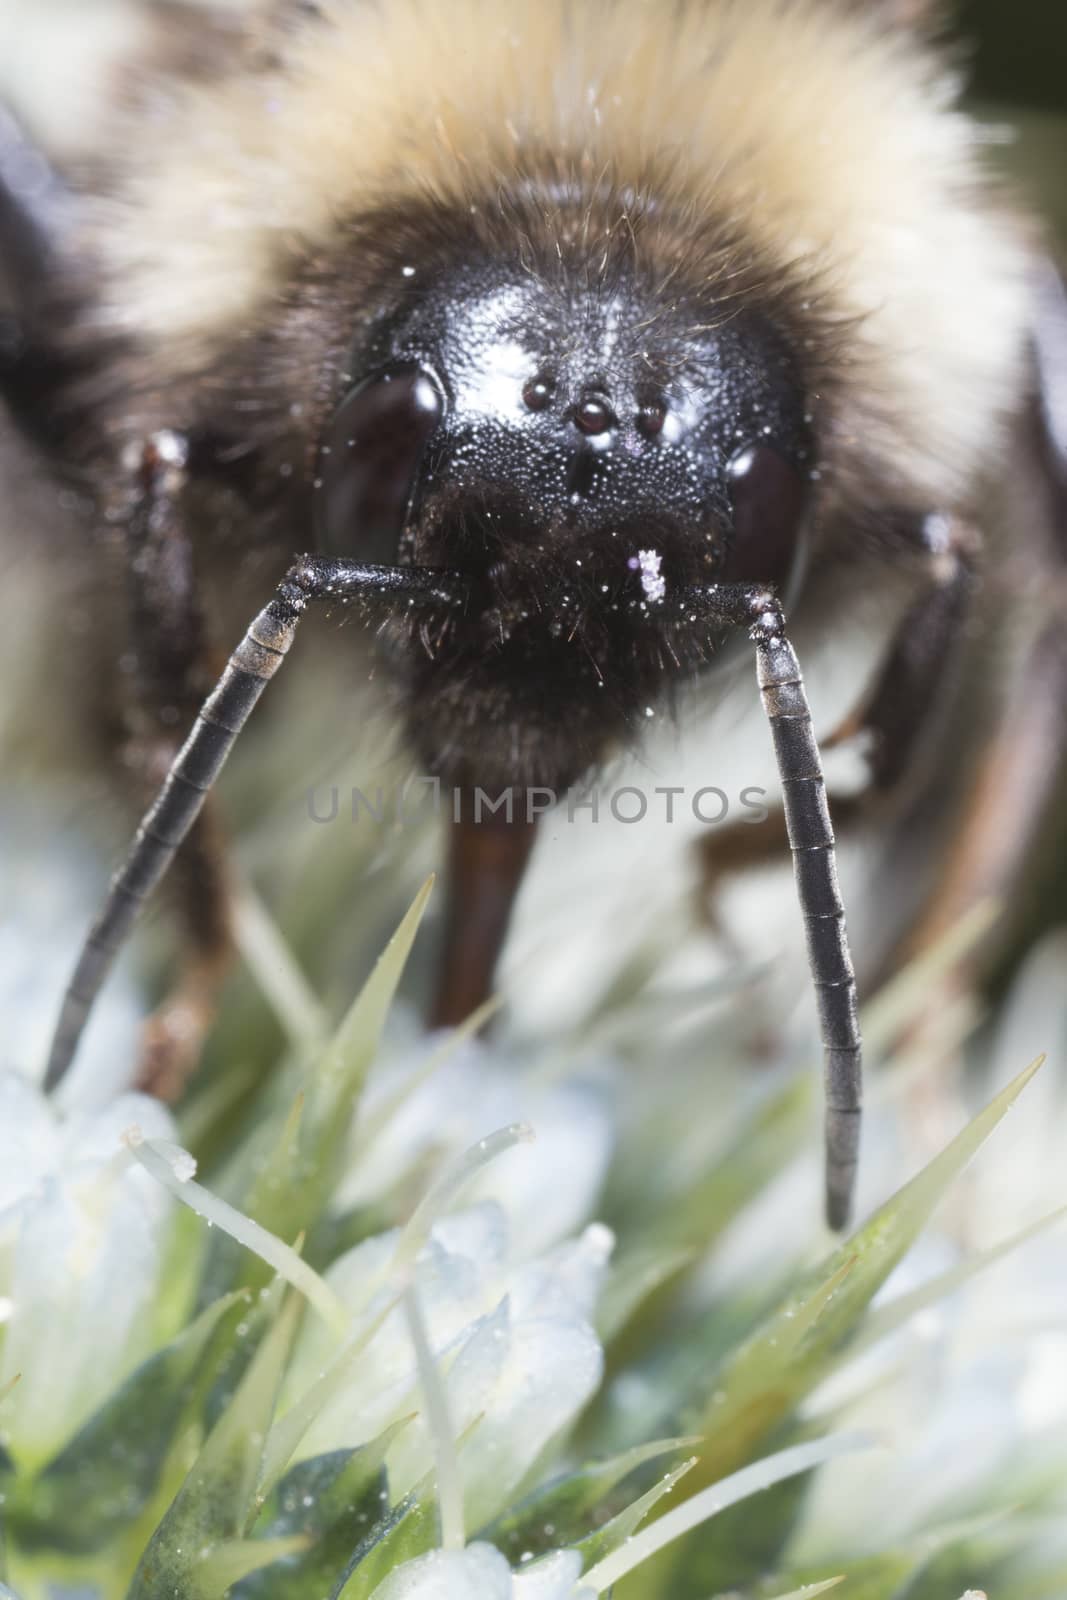 Macro of a honey bee, extrem close up